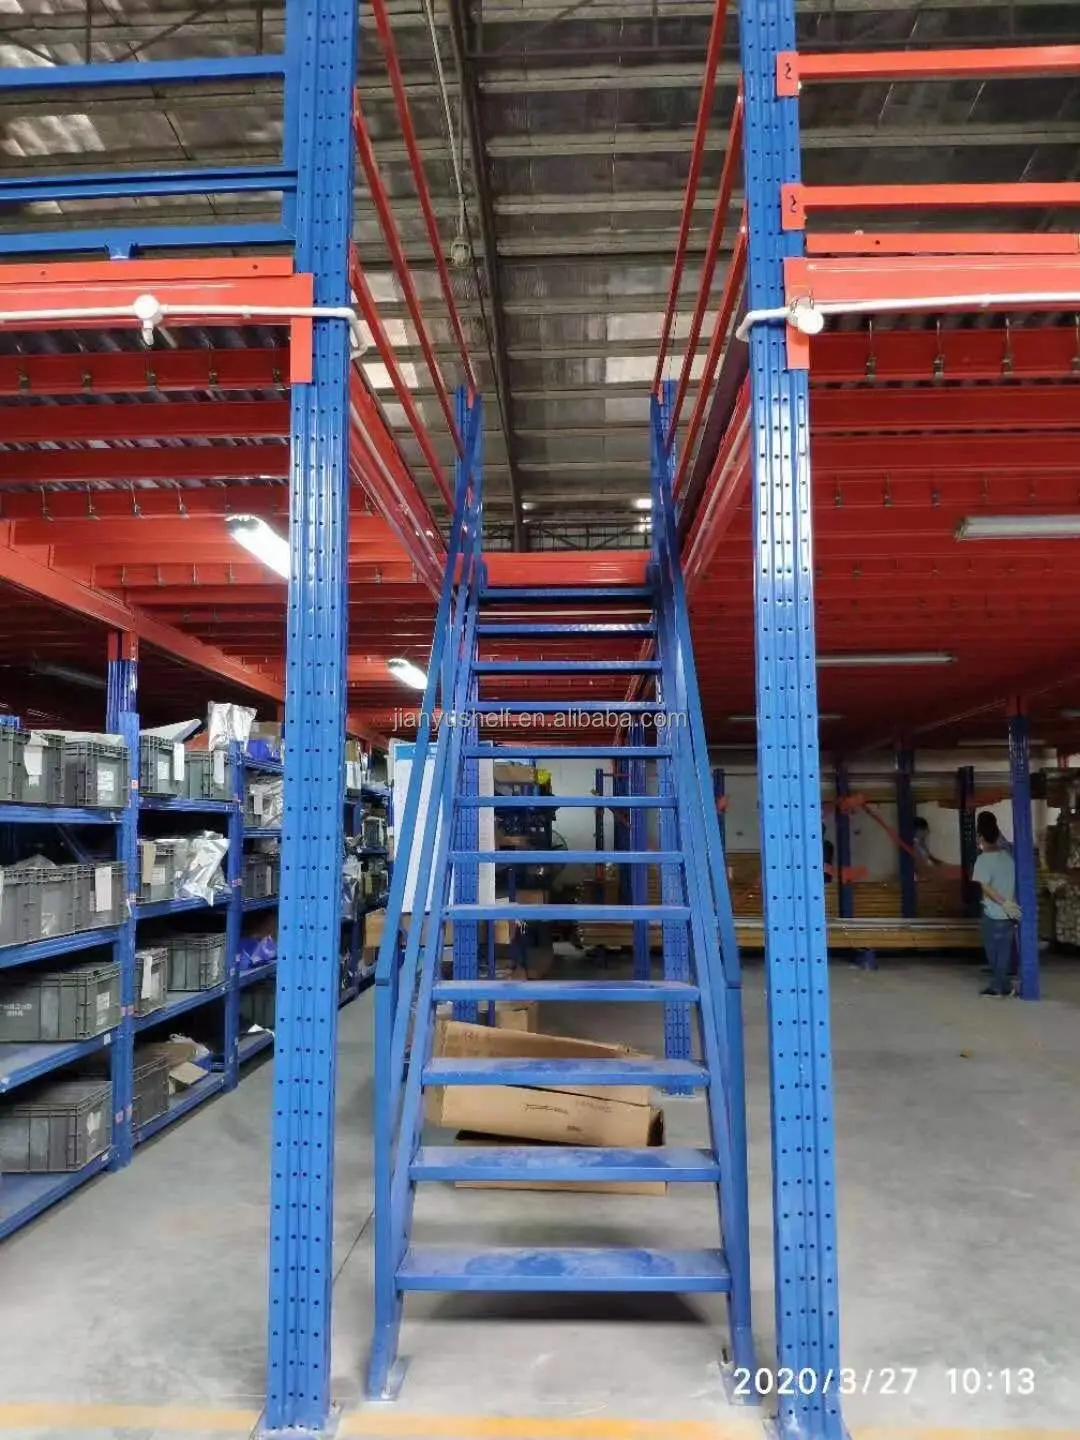 steel industrial shelving warehouse shelf racking heavy duty warehouse mezzanine floor rack for warehouse storage factory